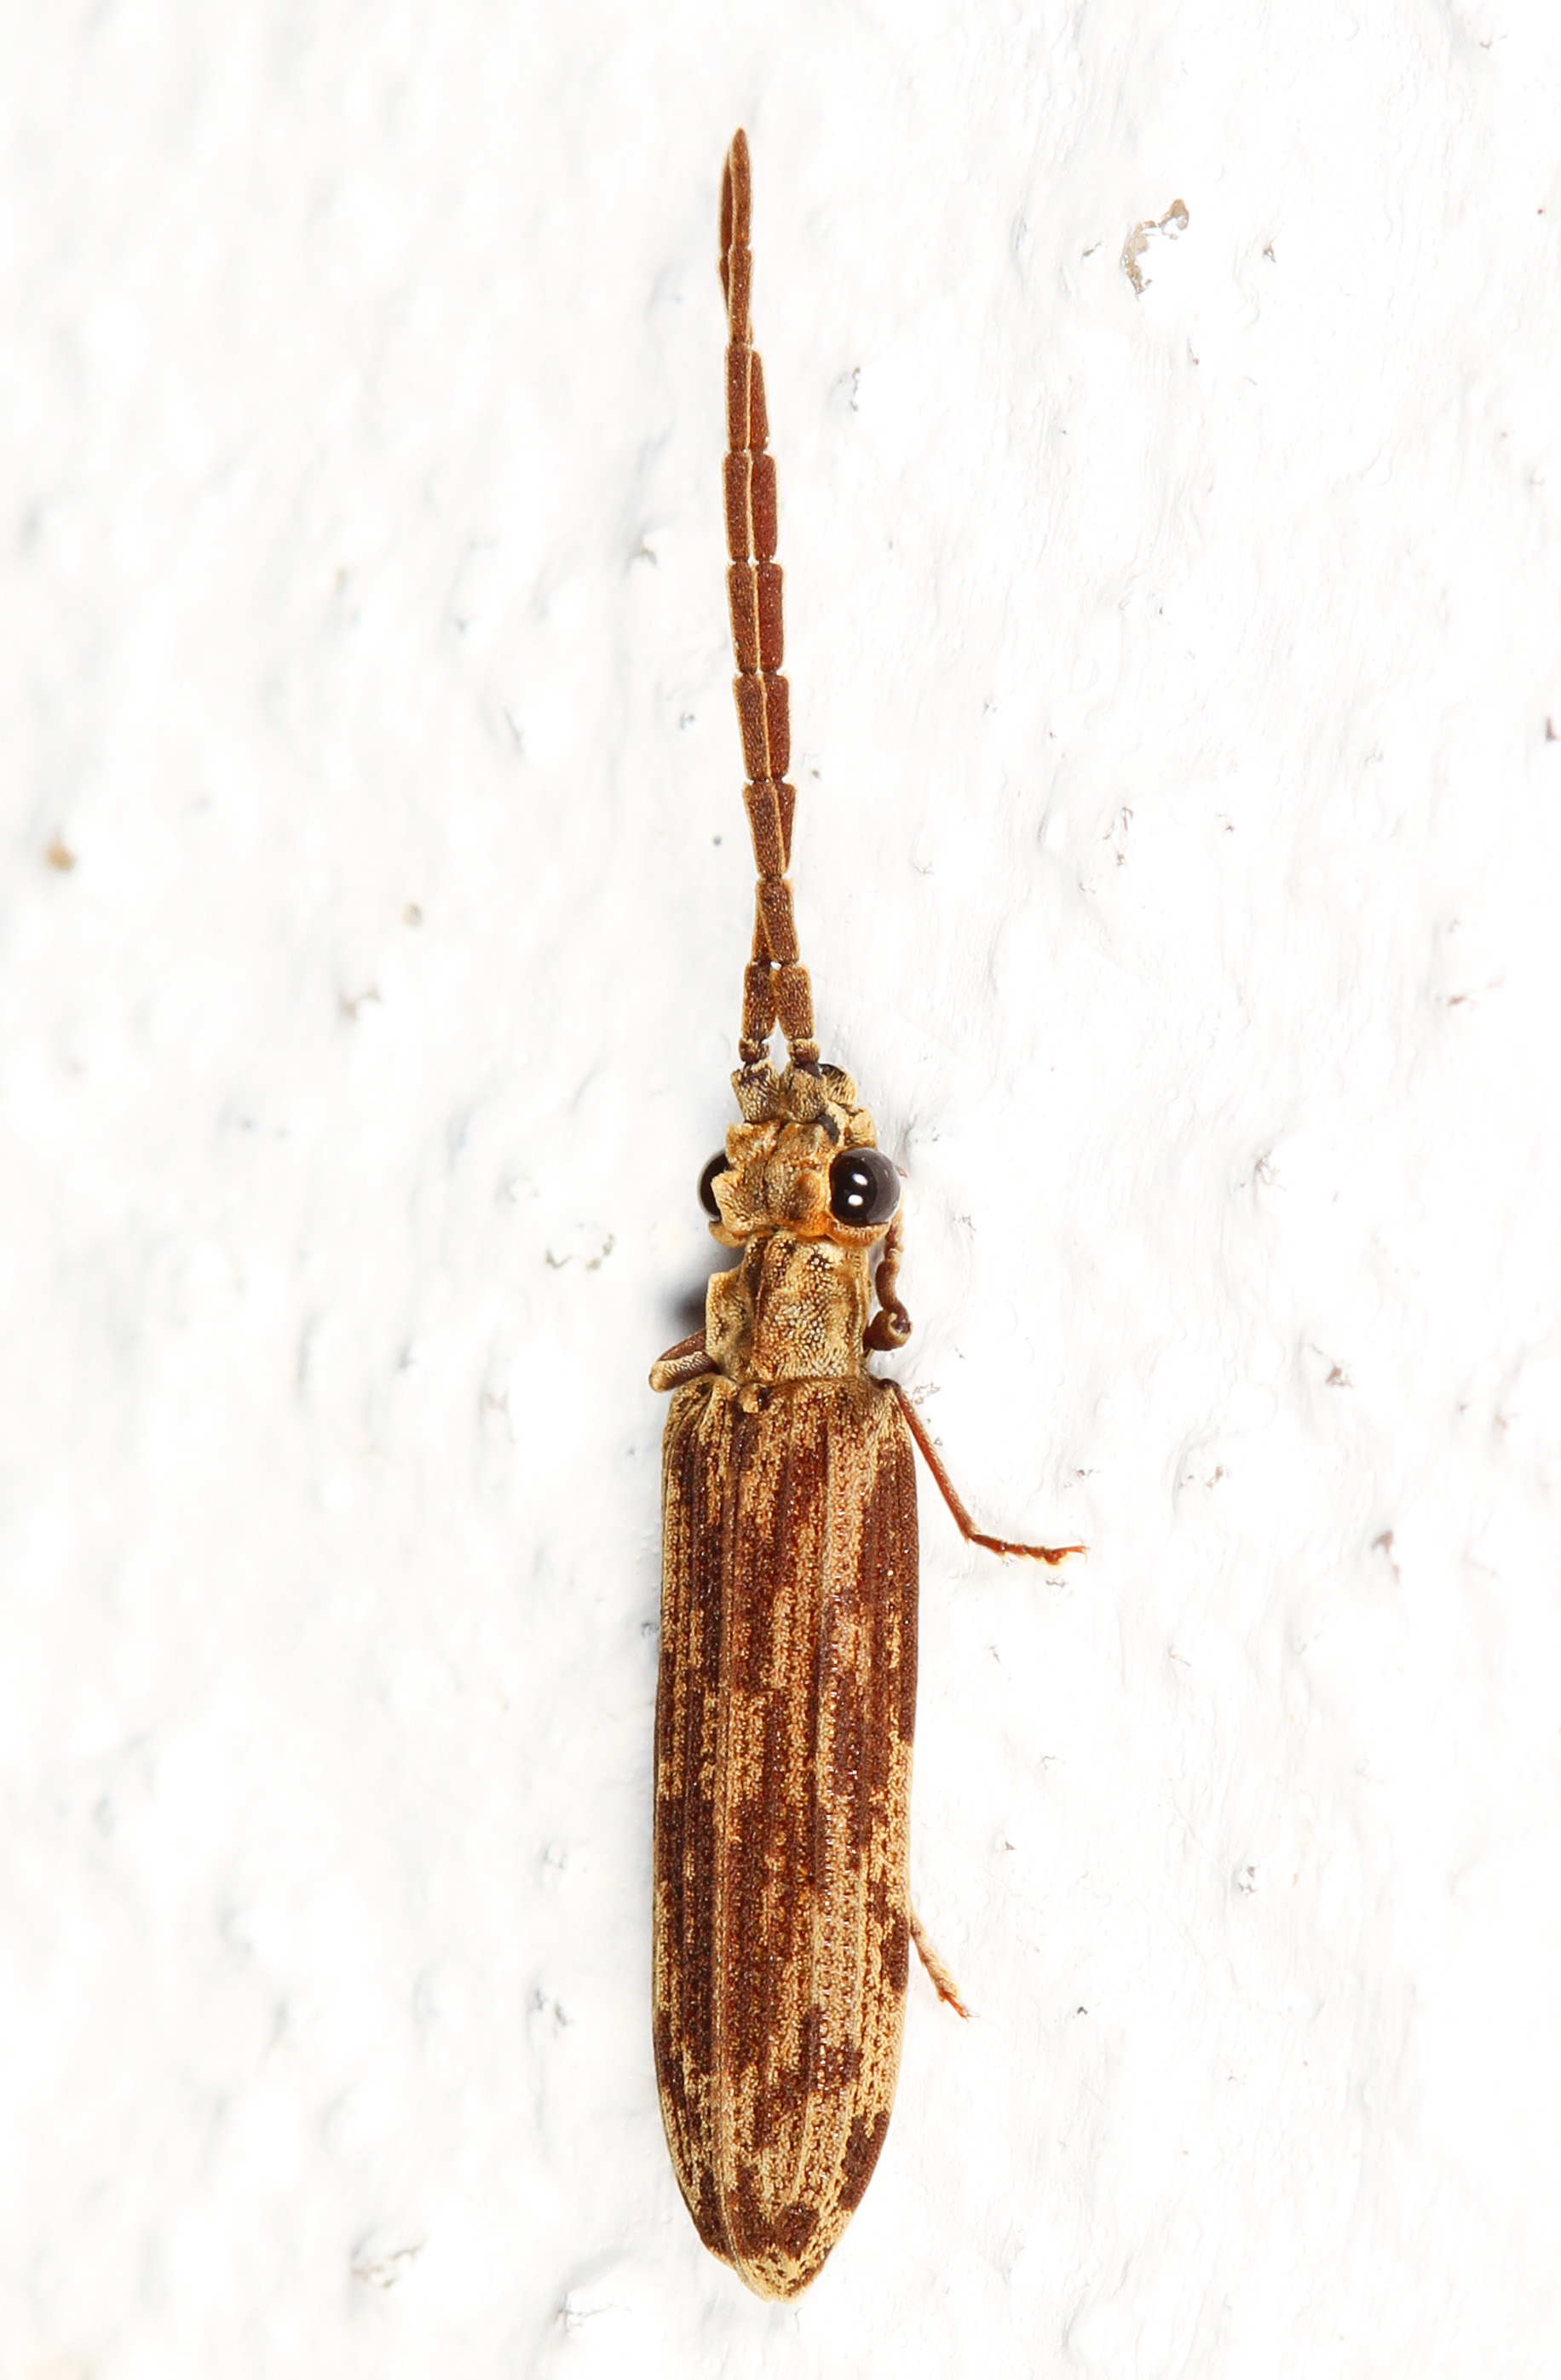 Day 196 - Reticulated Beetle - Tenomerga cinereus or cinerea, Woodbridge, Virginia